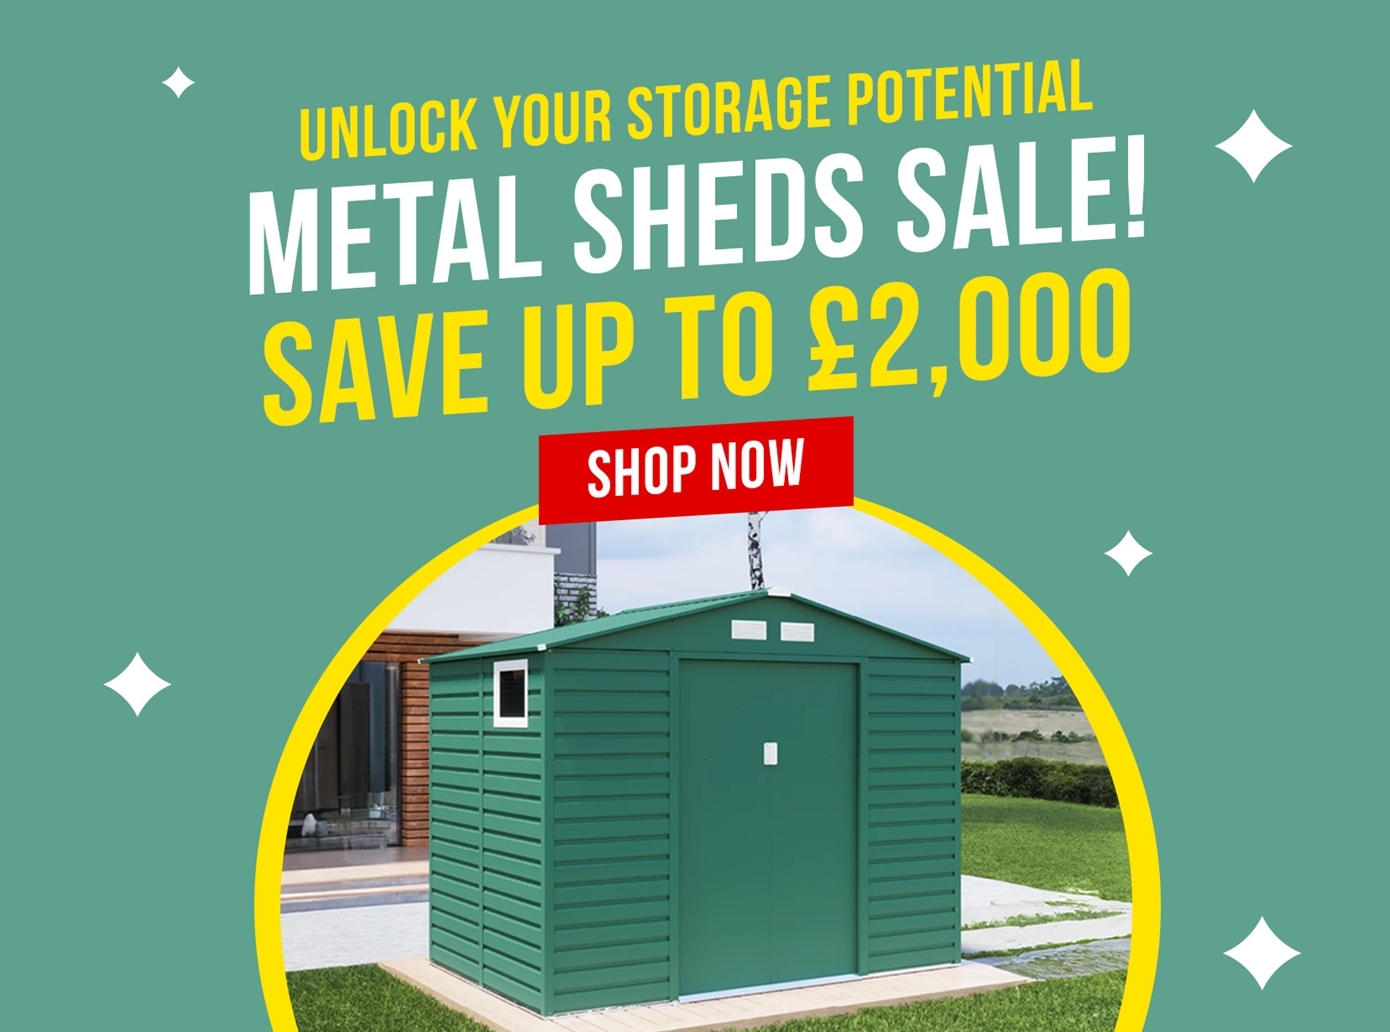 Metal sheds sale